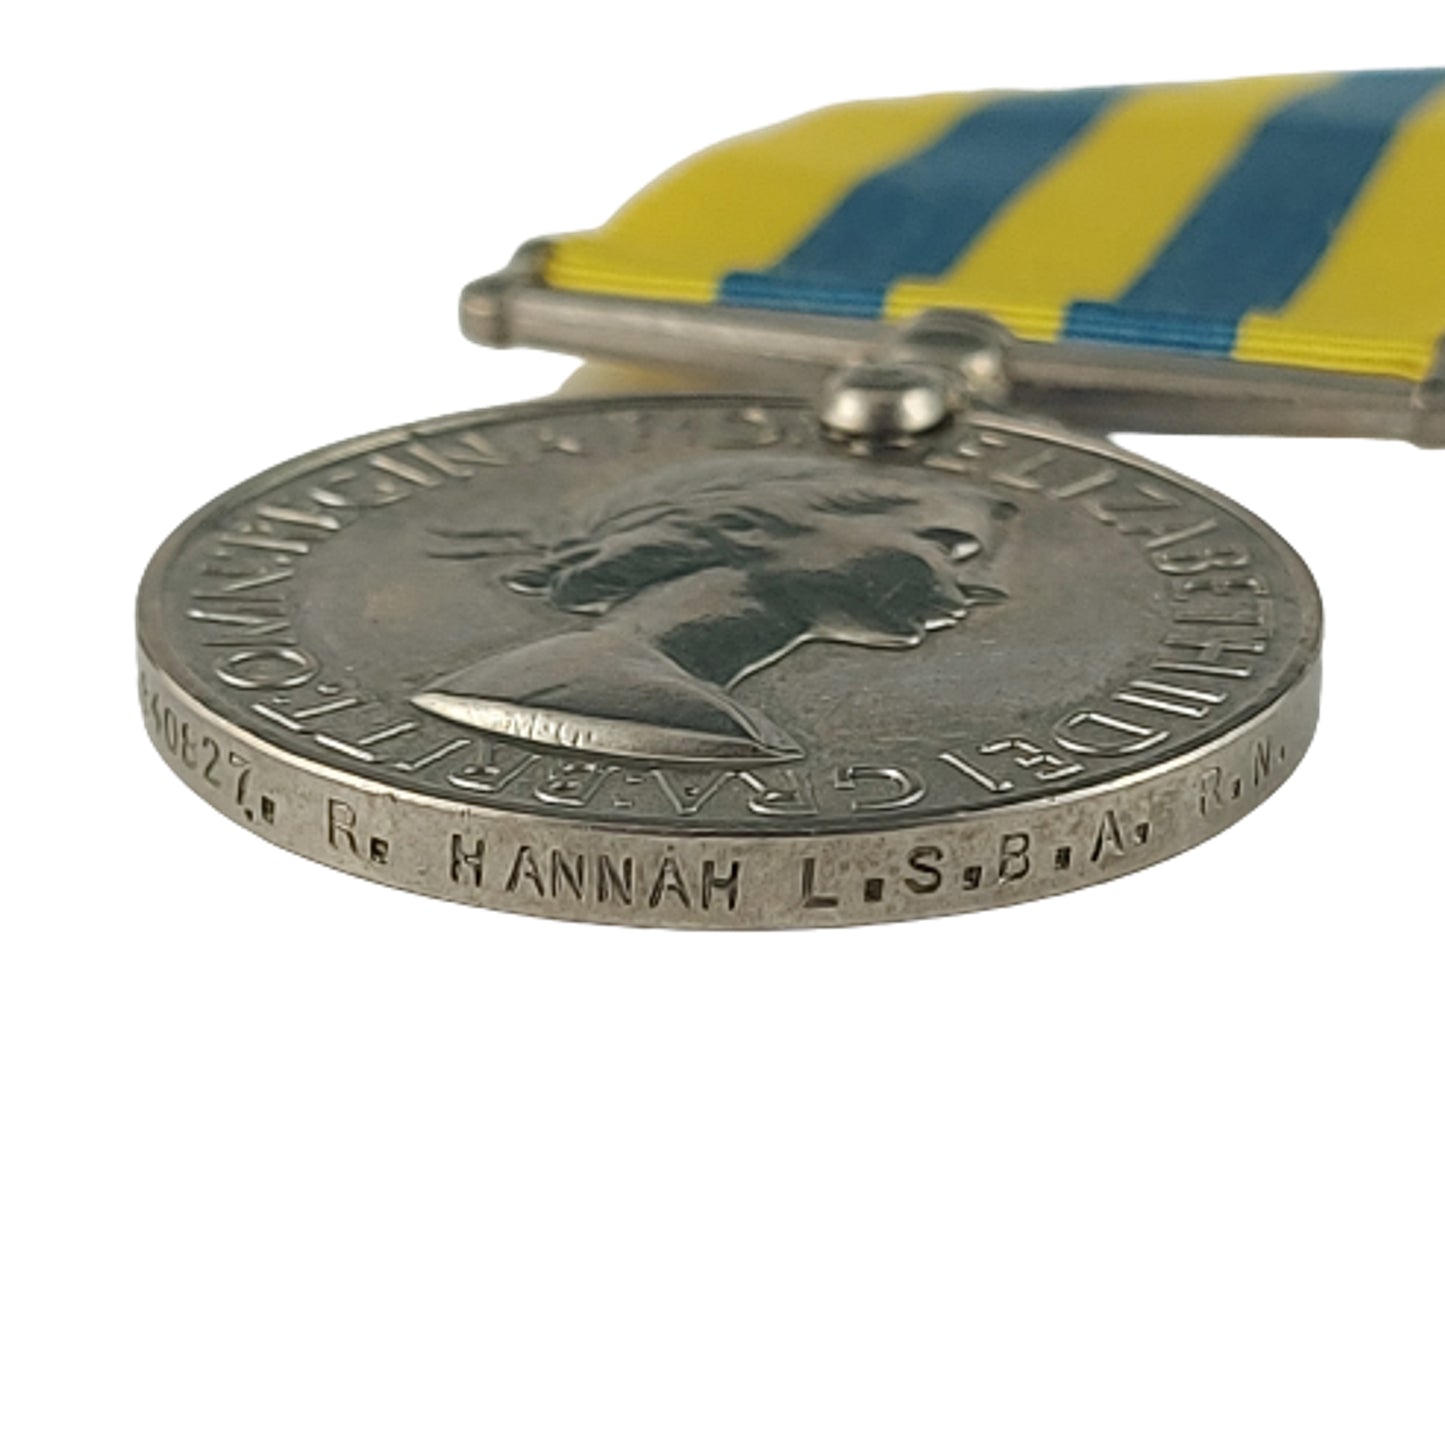 Named British Korea War Medal - Royal Navy